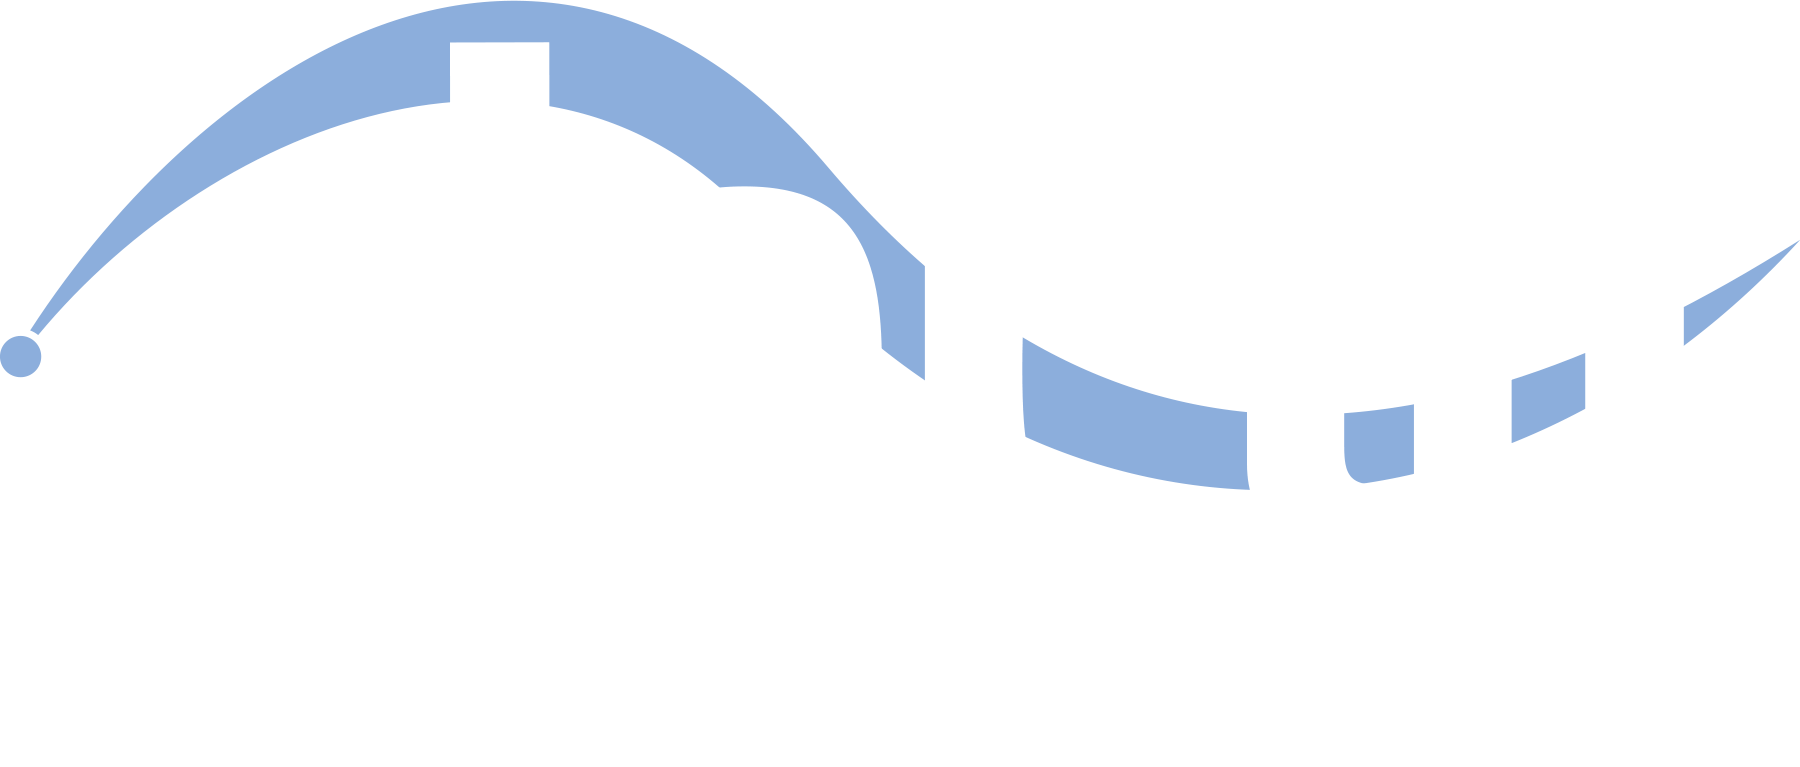 Depth Logo - In Depth Engineering